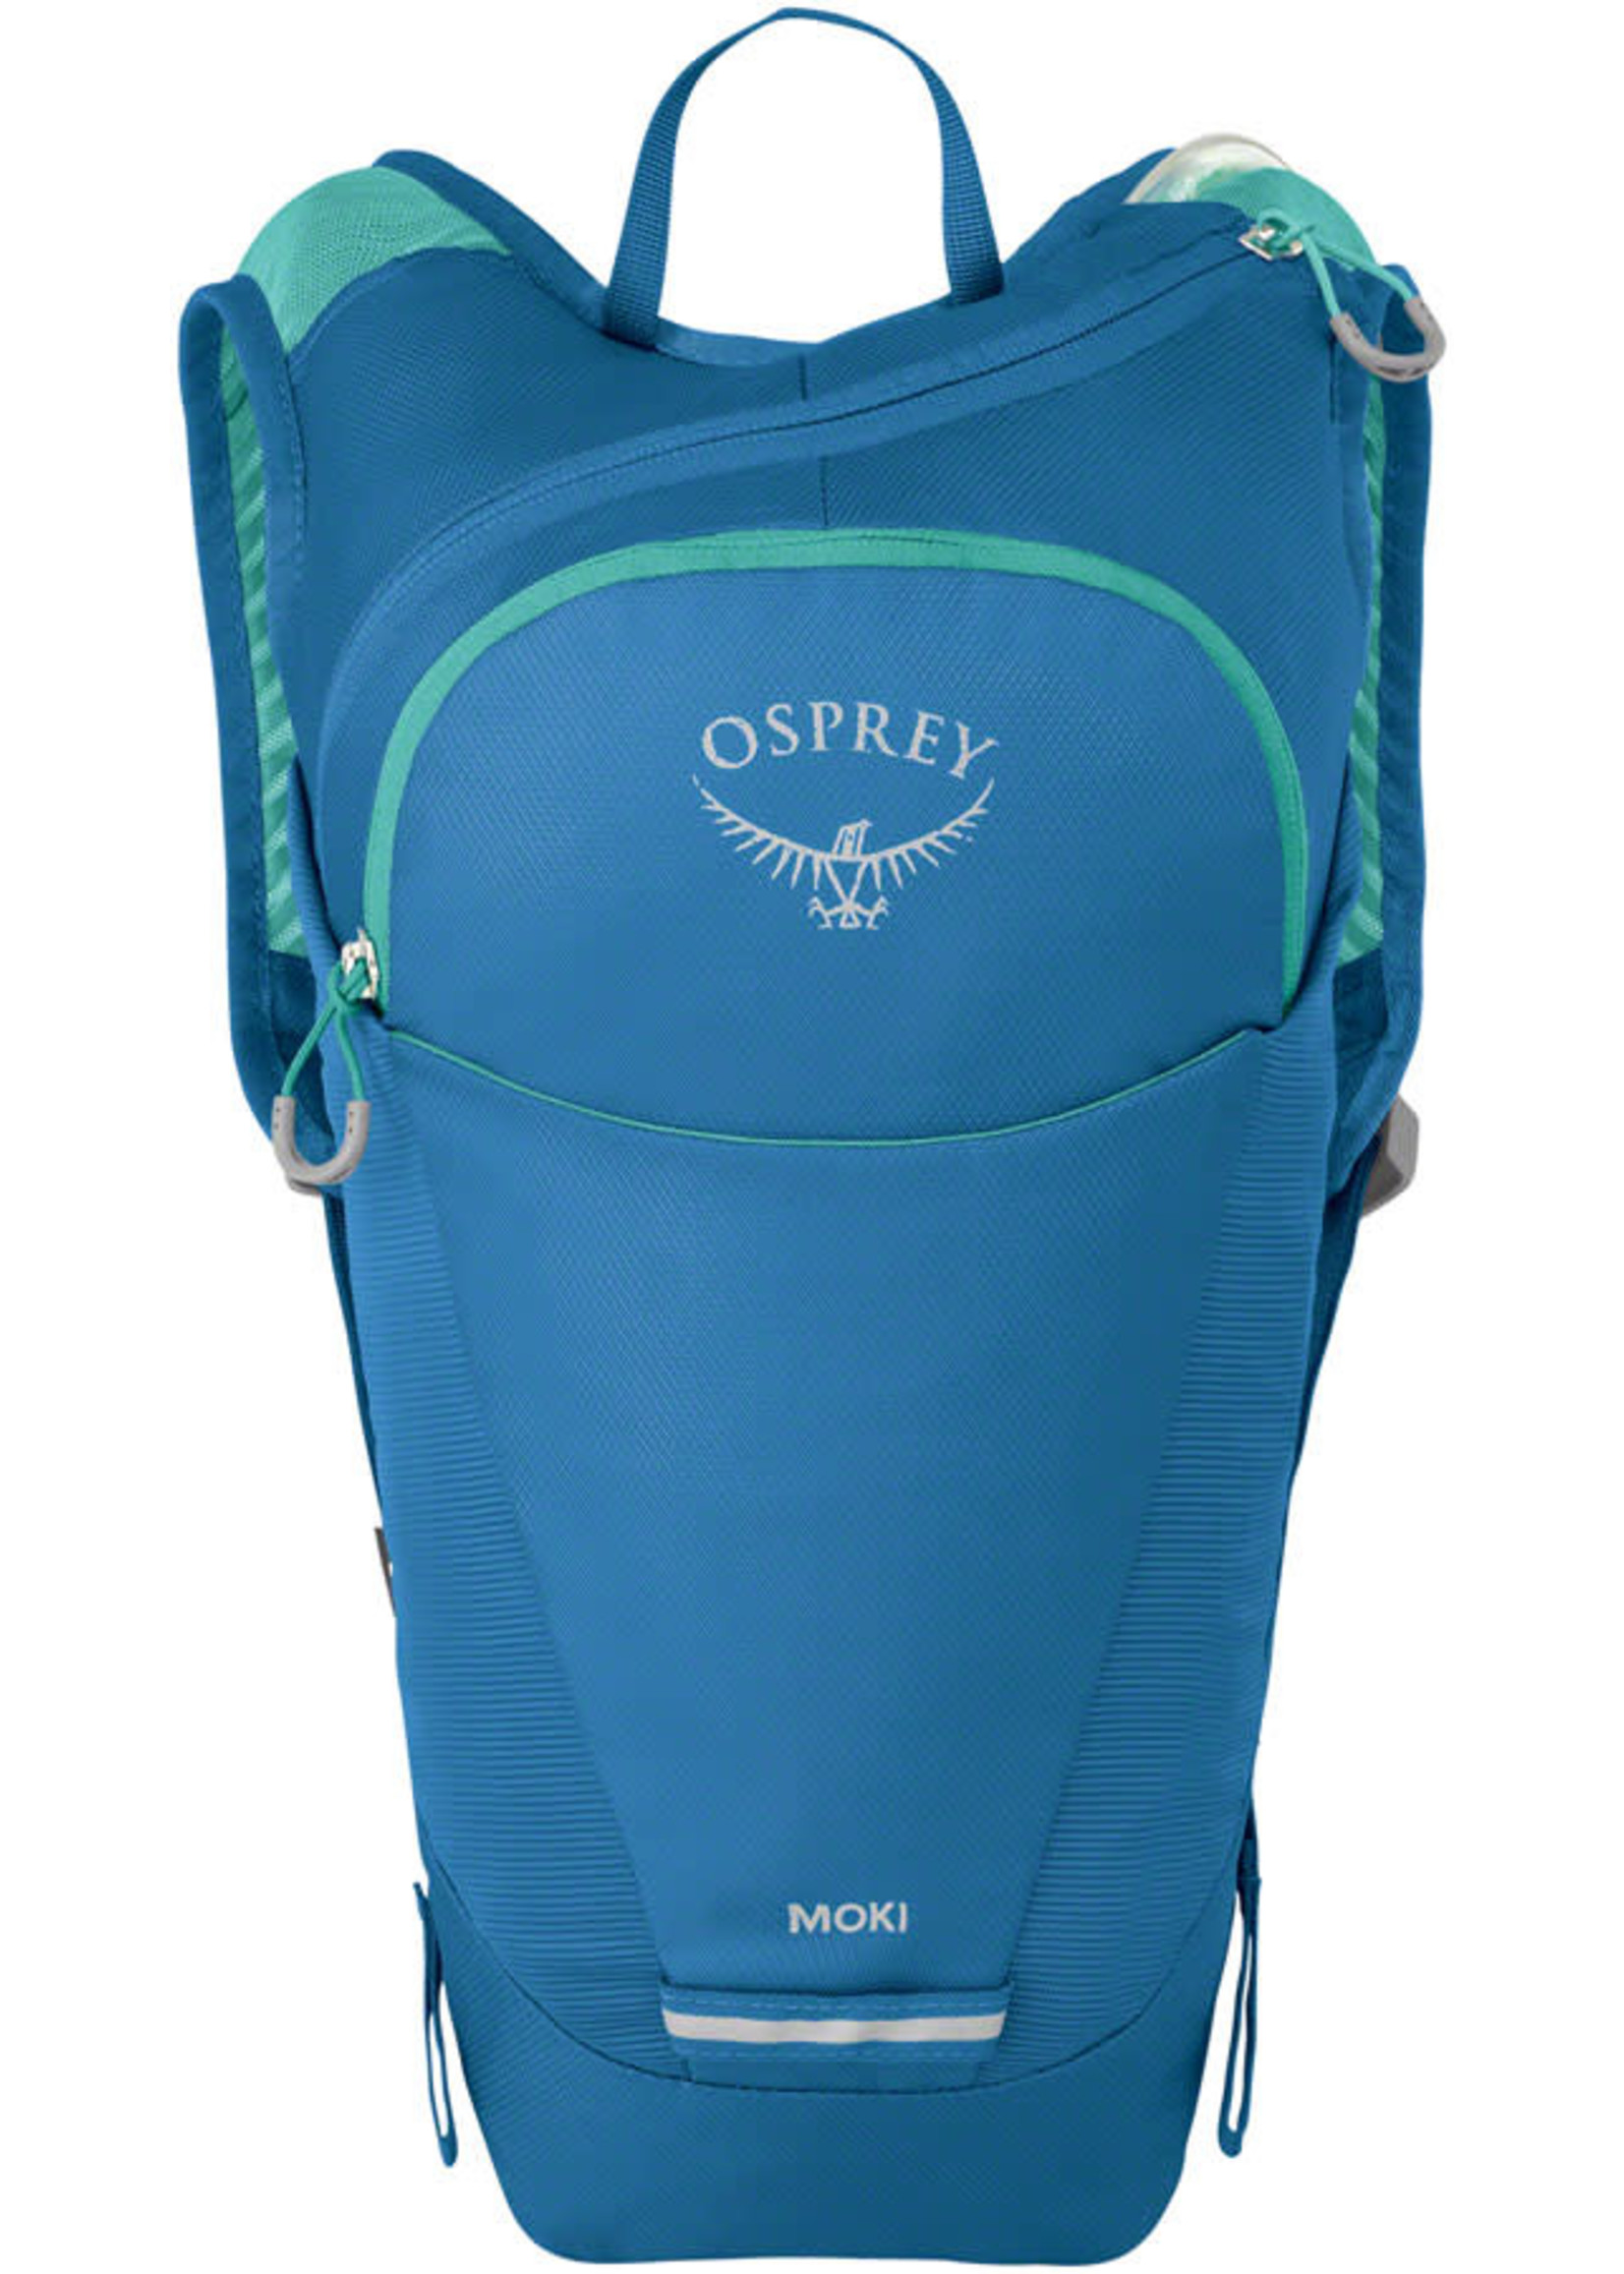 Osprey Osprey Moki 1.5 Kids Hydration Pack: Wild Blue, One Size